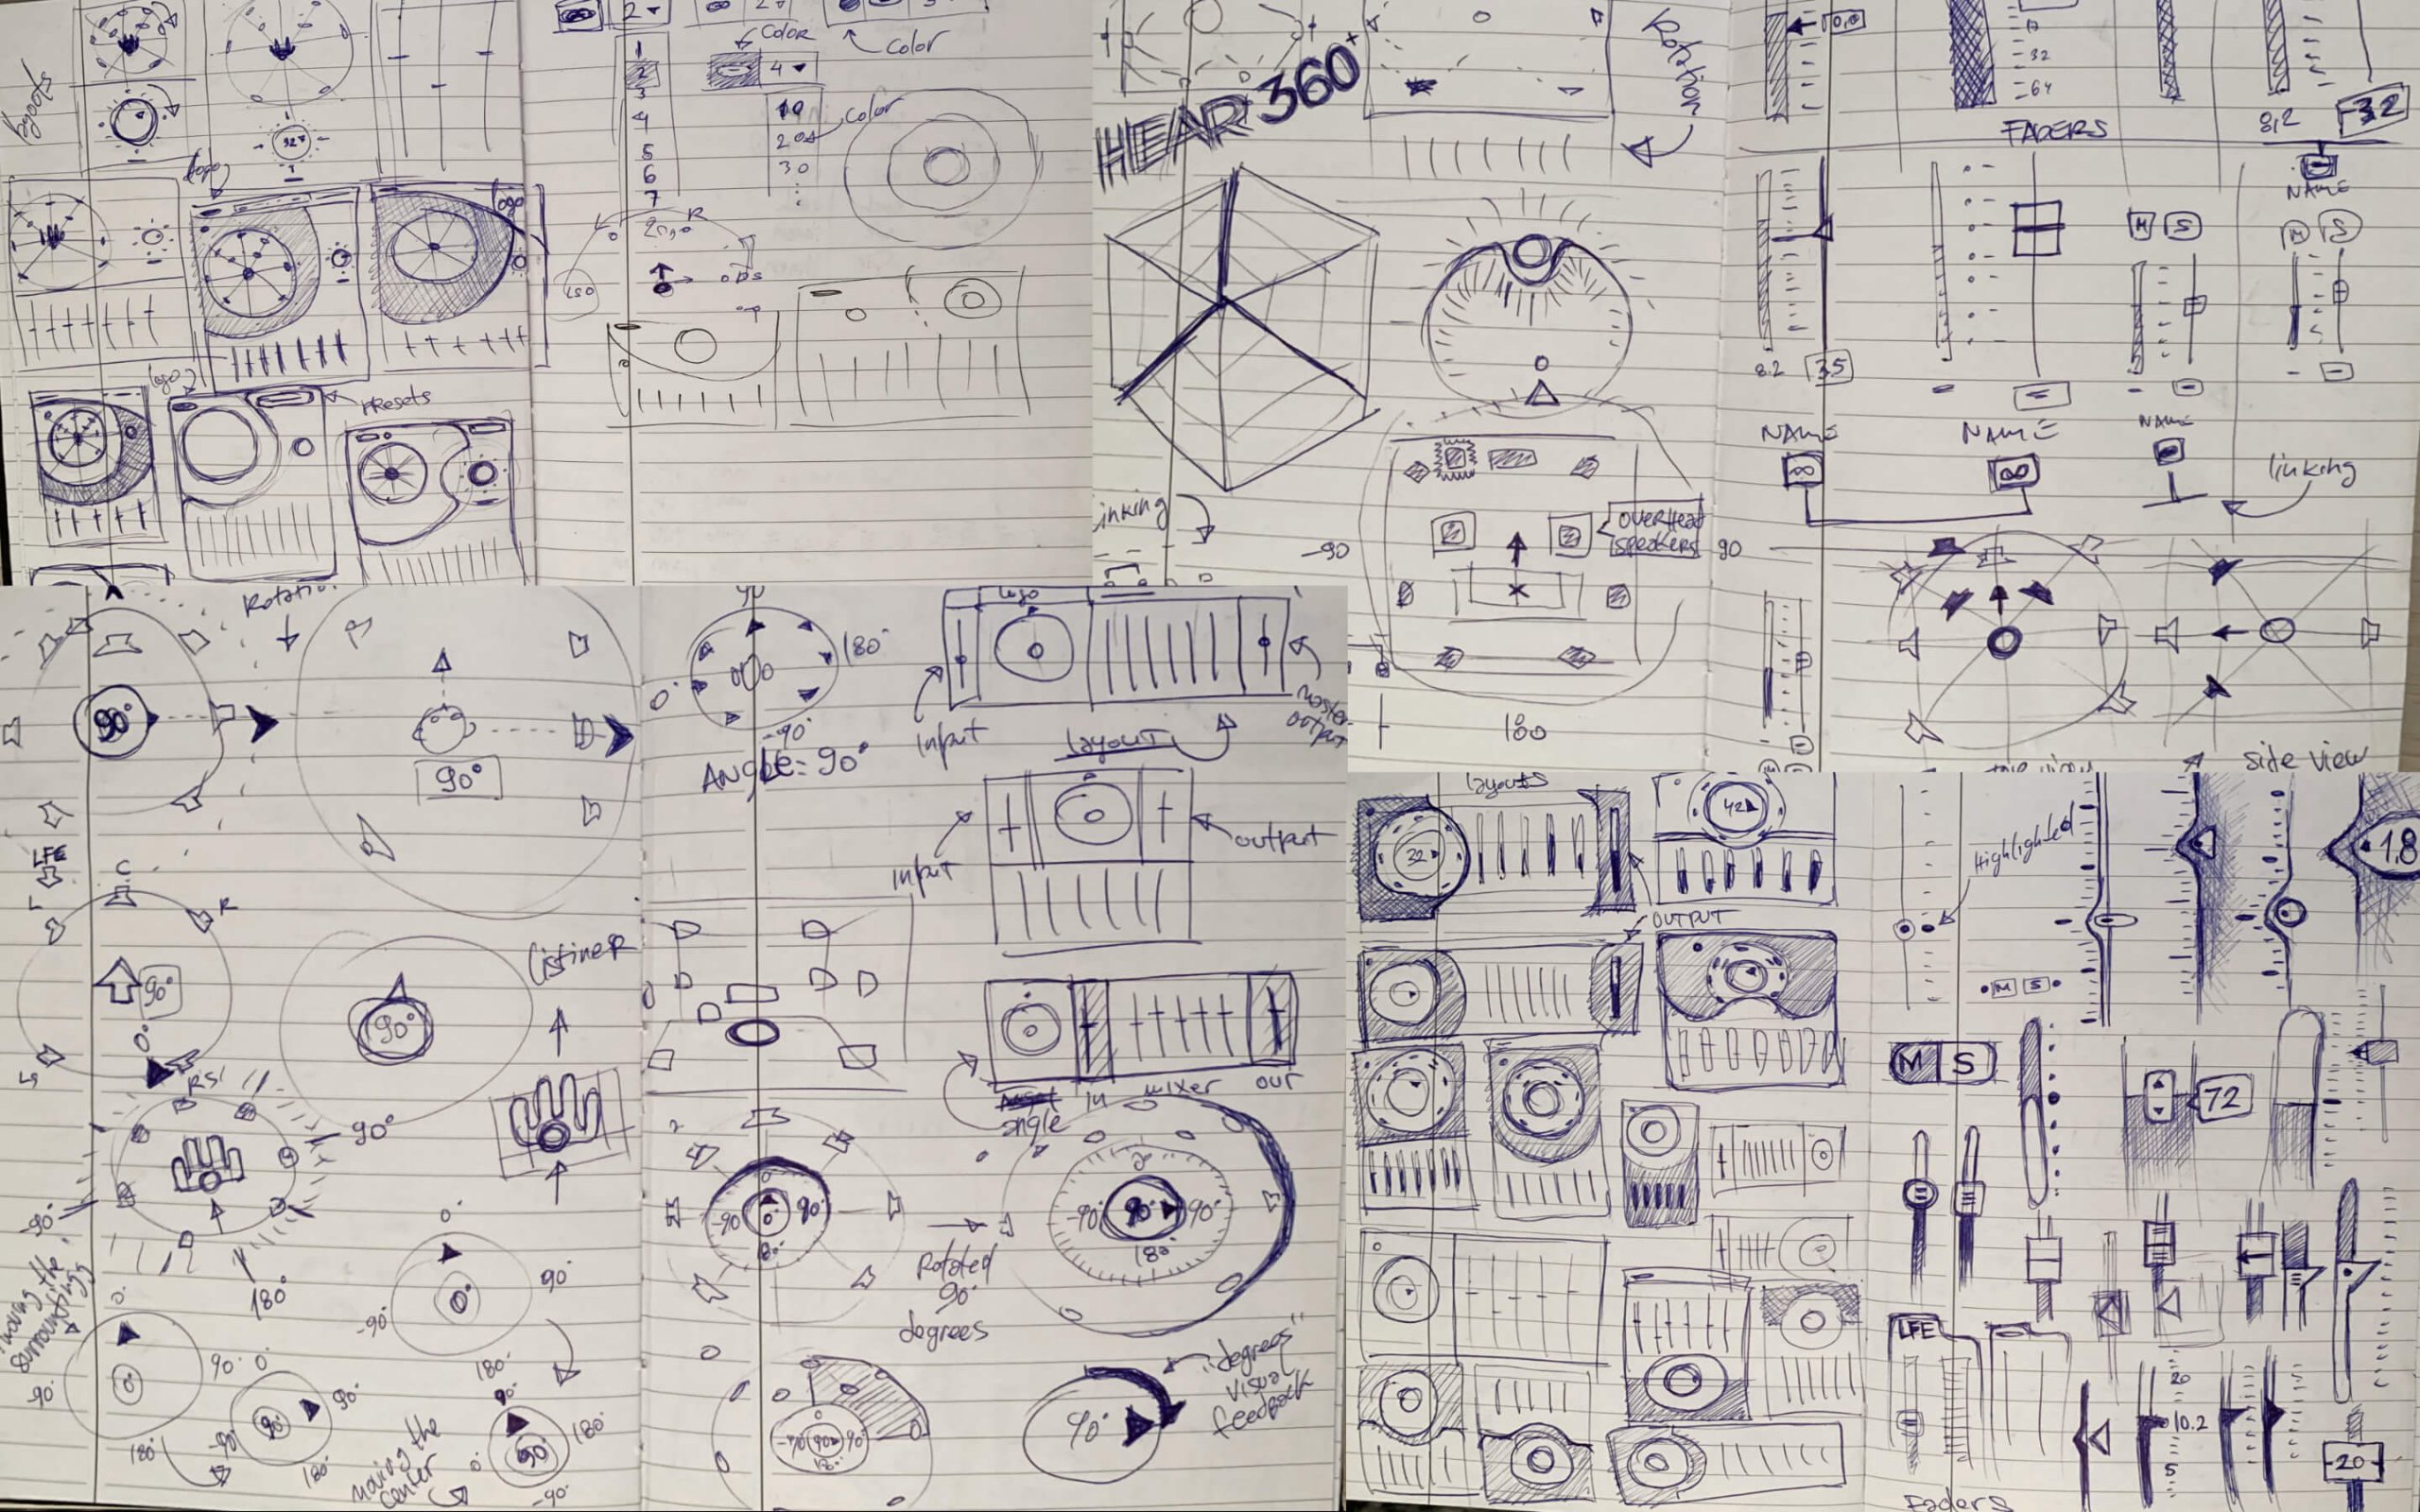 Plugin interface sketches